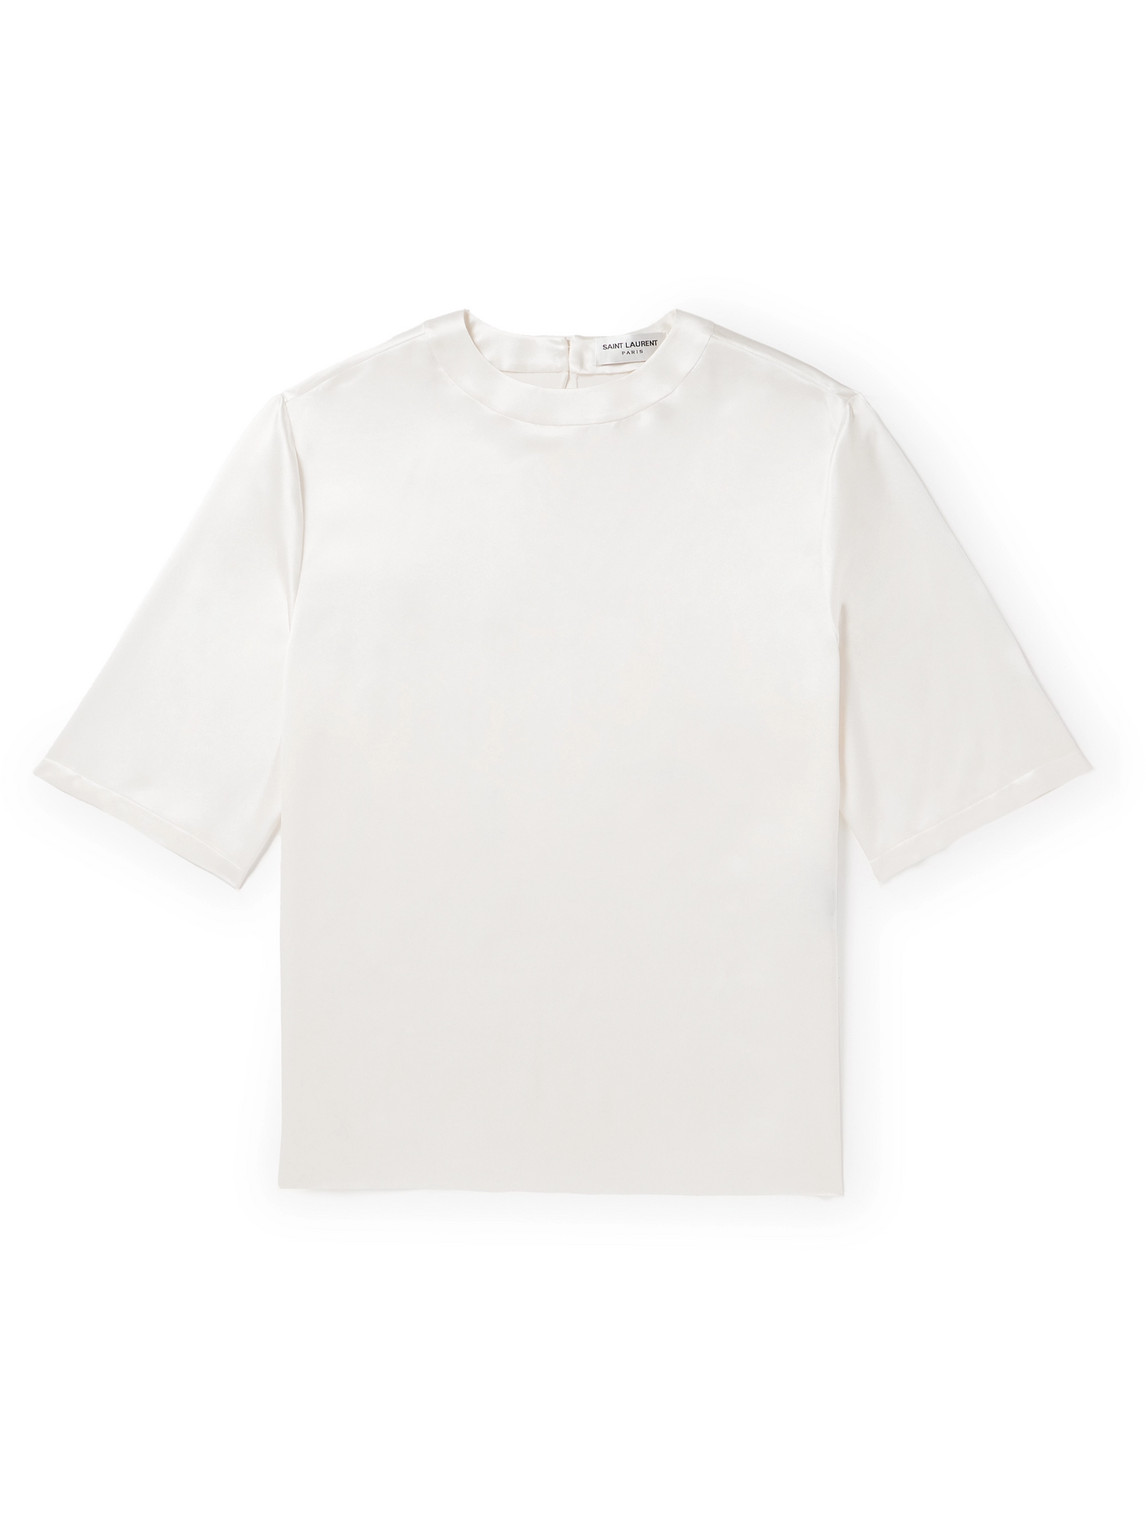 SAINT LAURENT - Silk-Satin T-Shirt - Men - White - L von SAINT LAURENT